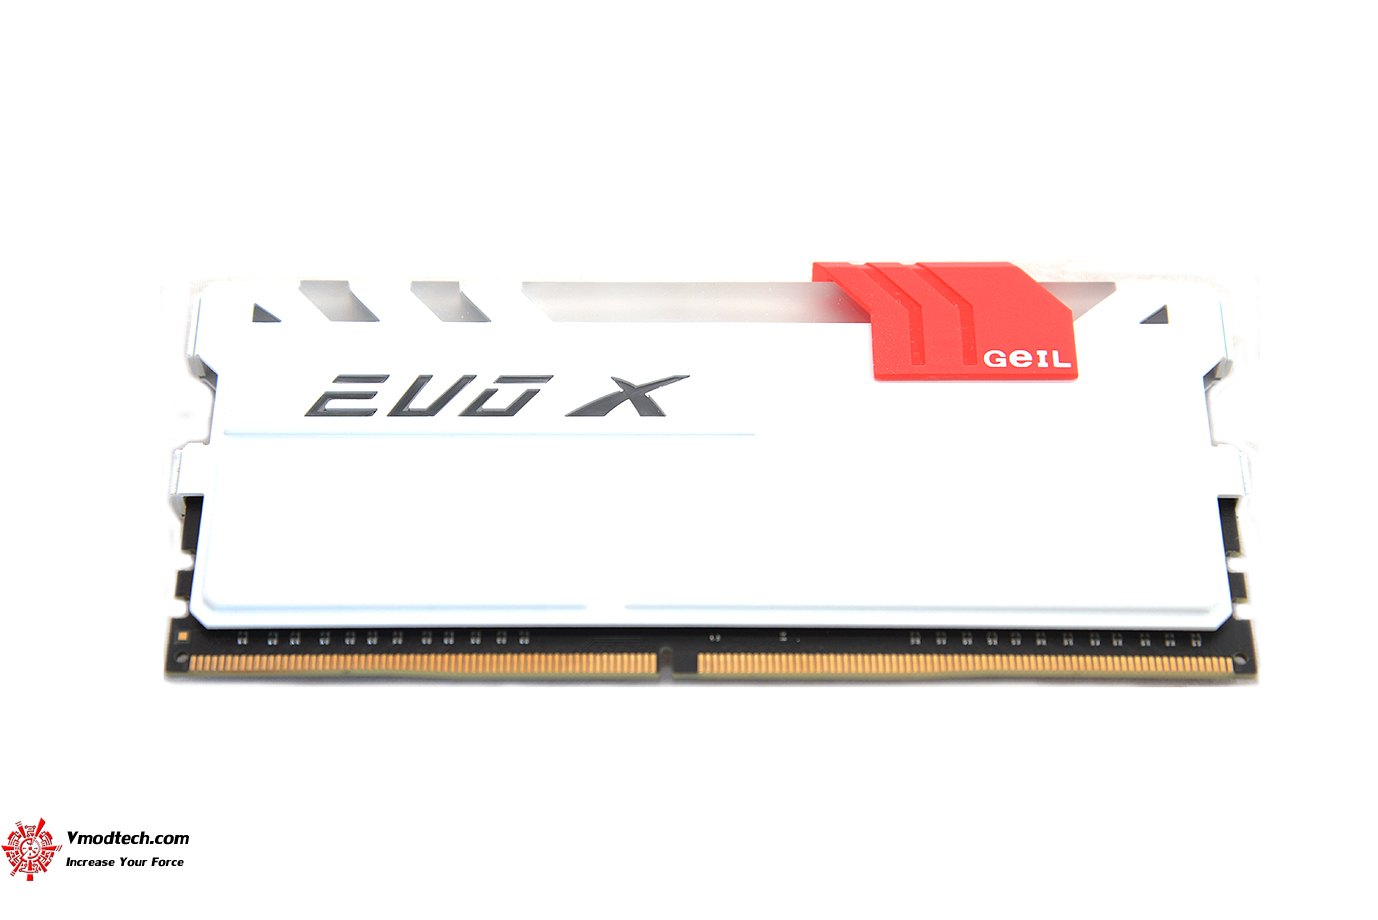 dsc 72631 GEIL EVO X RGB DDR4 2400Mhz 8GB CL16 Review 